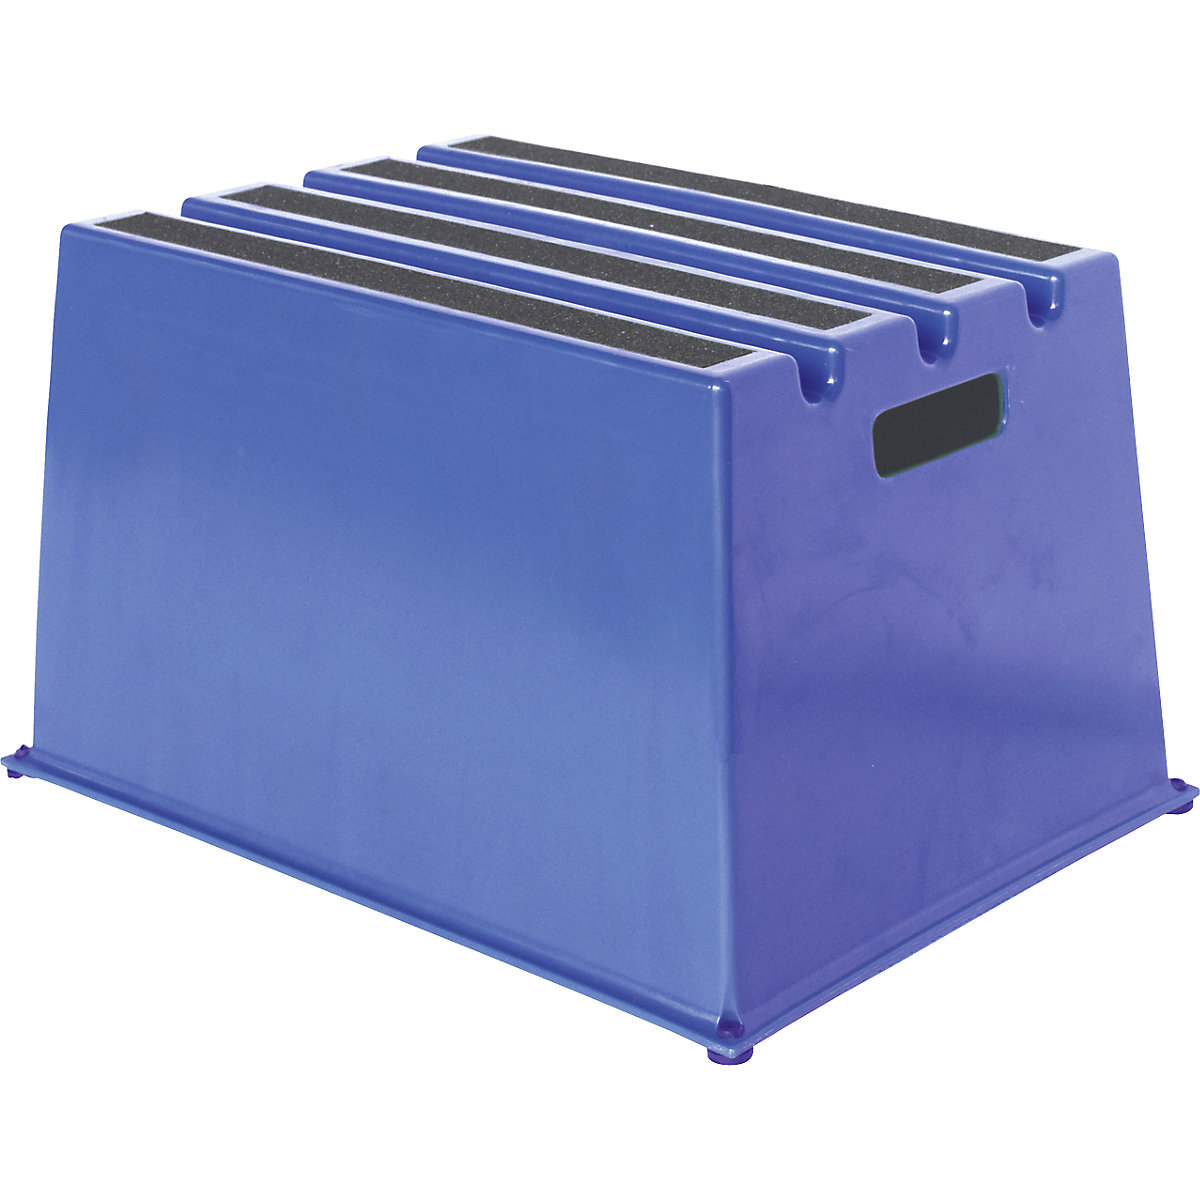 Kunststof trap met antislip treden – Twinco, draagvermogen 150 kg, 1 trede, blauw-6